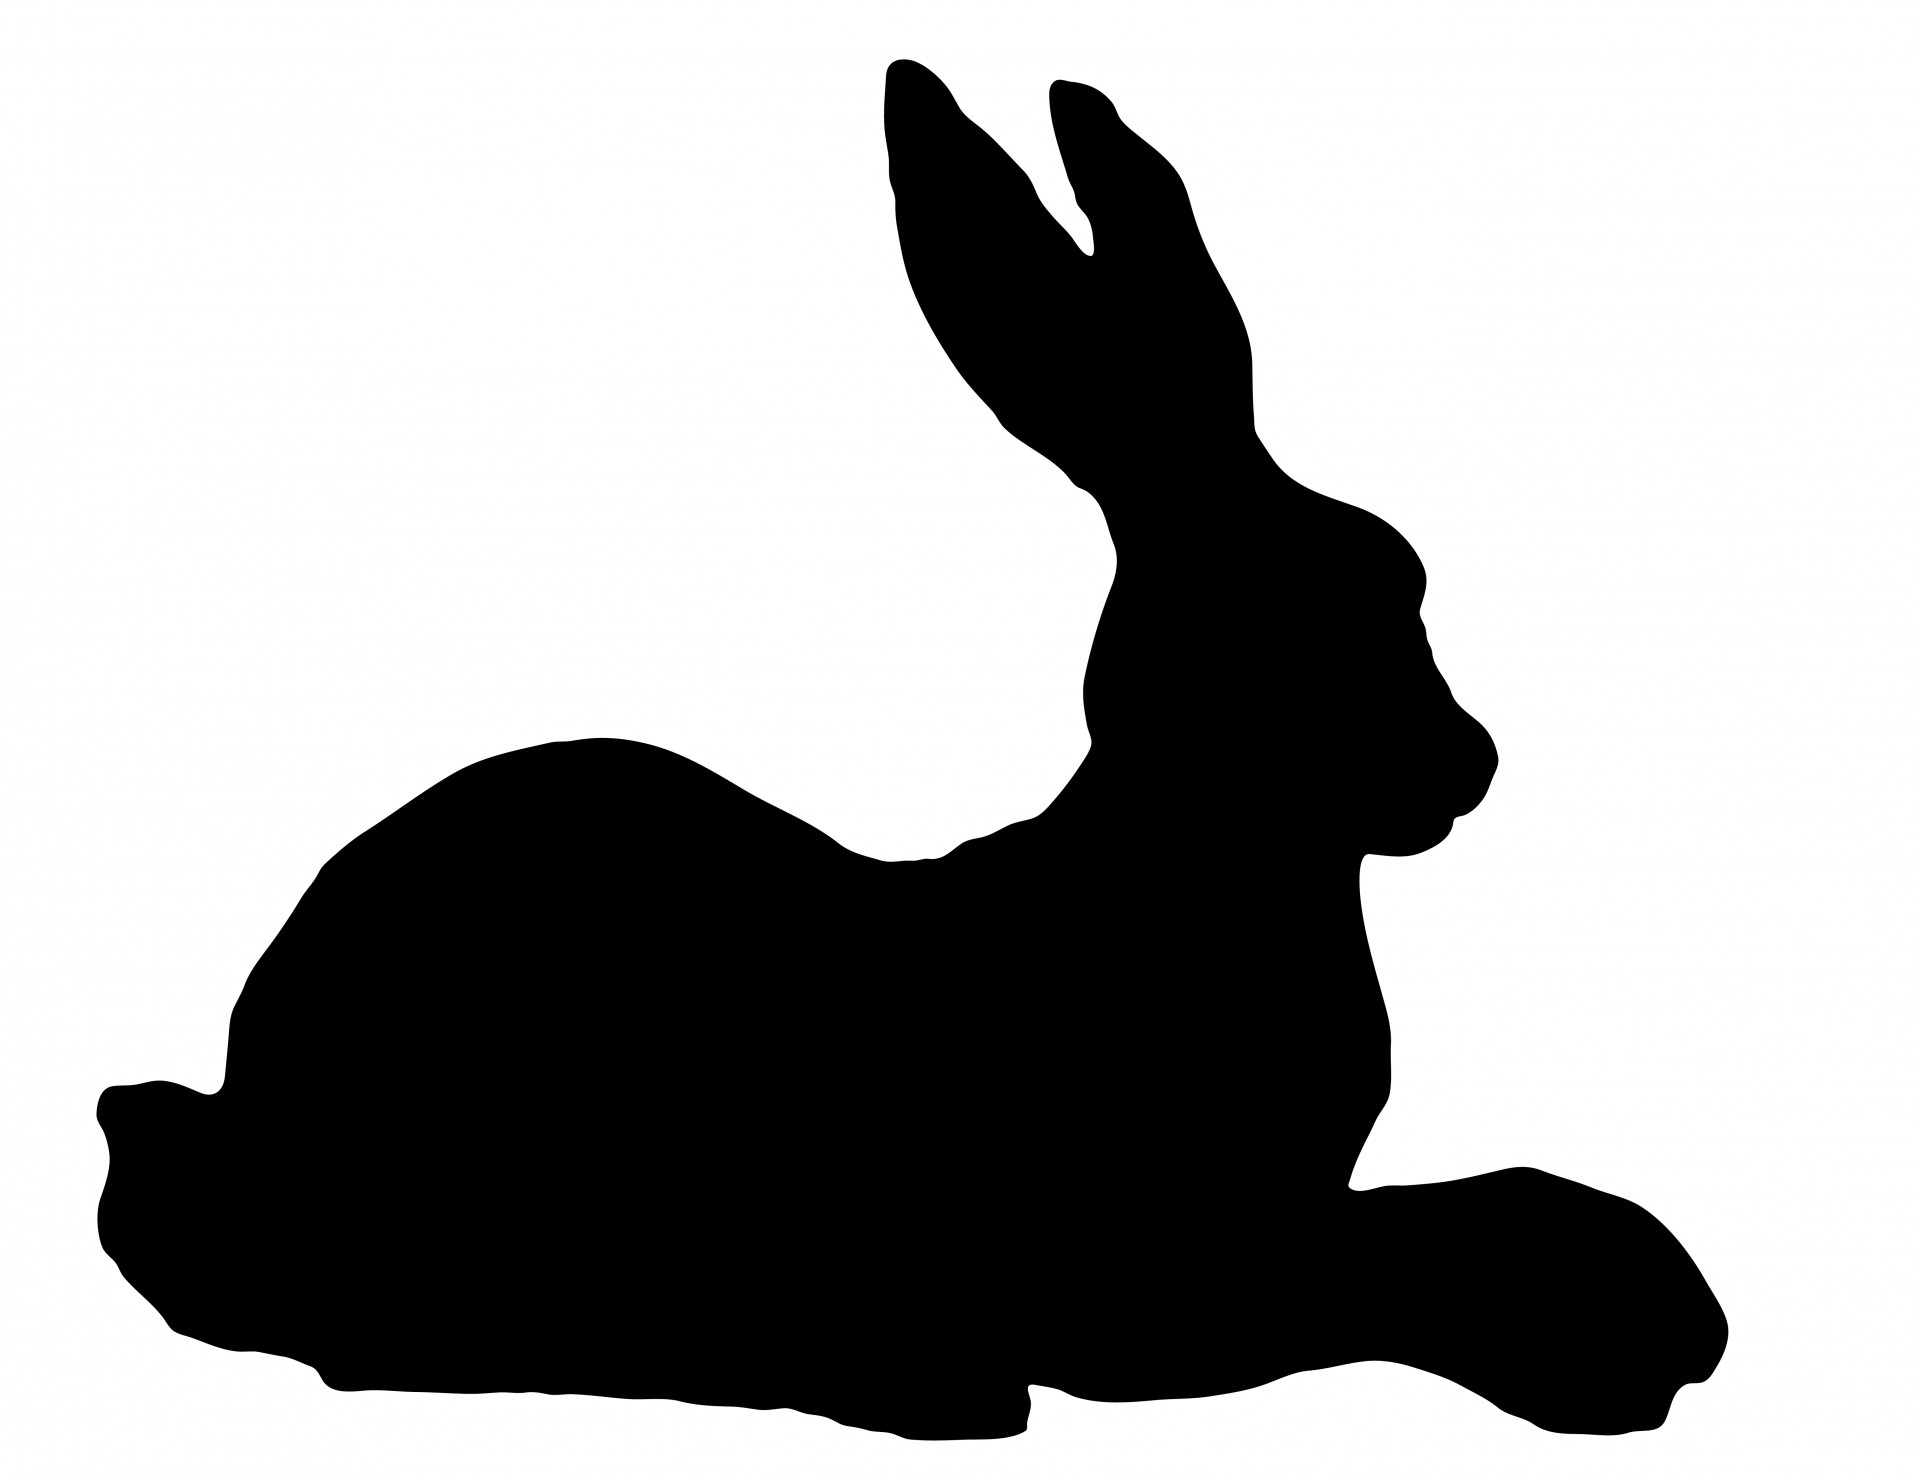 Rabbit Silhouette Clipart Free Stock Photo - Public Domain Pictures